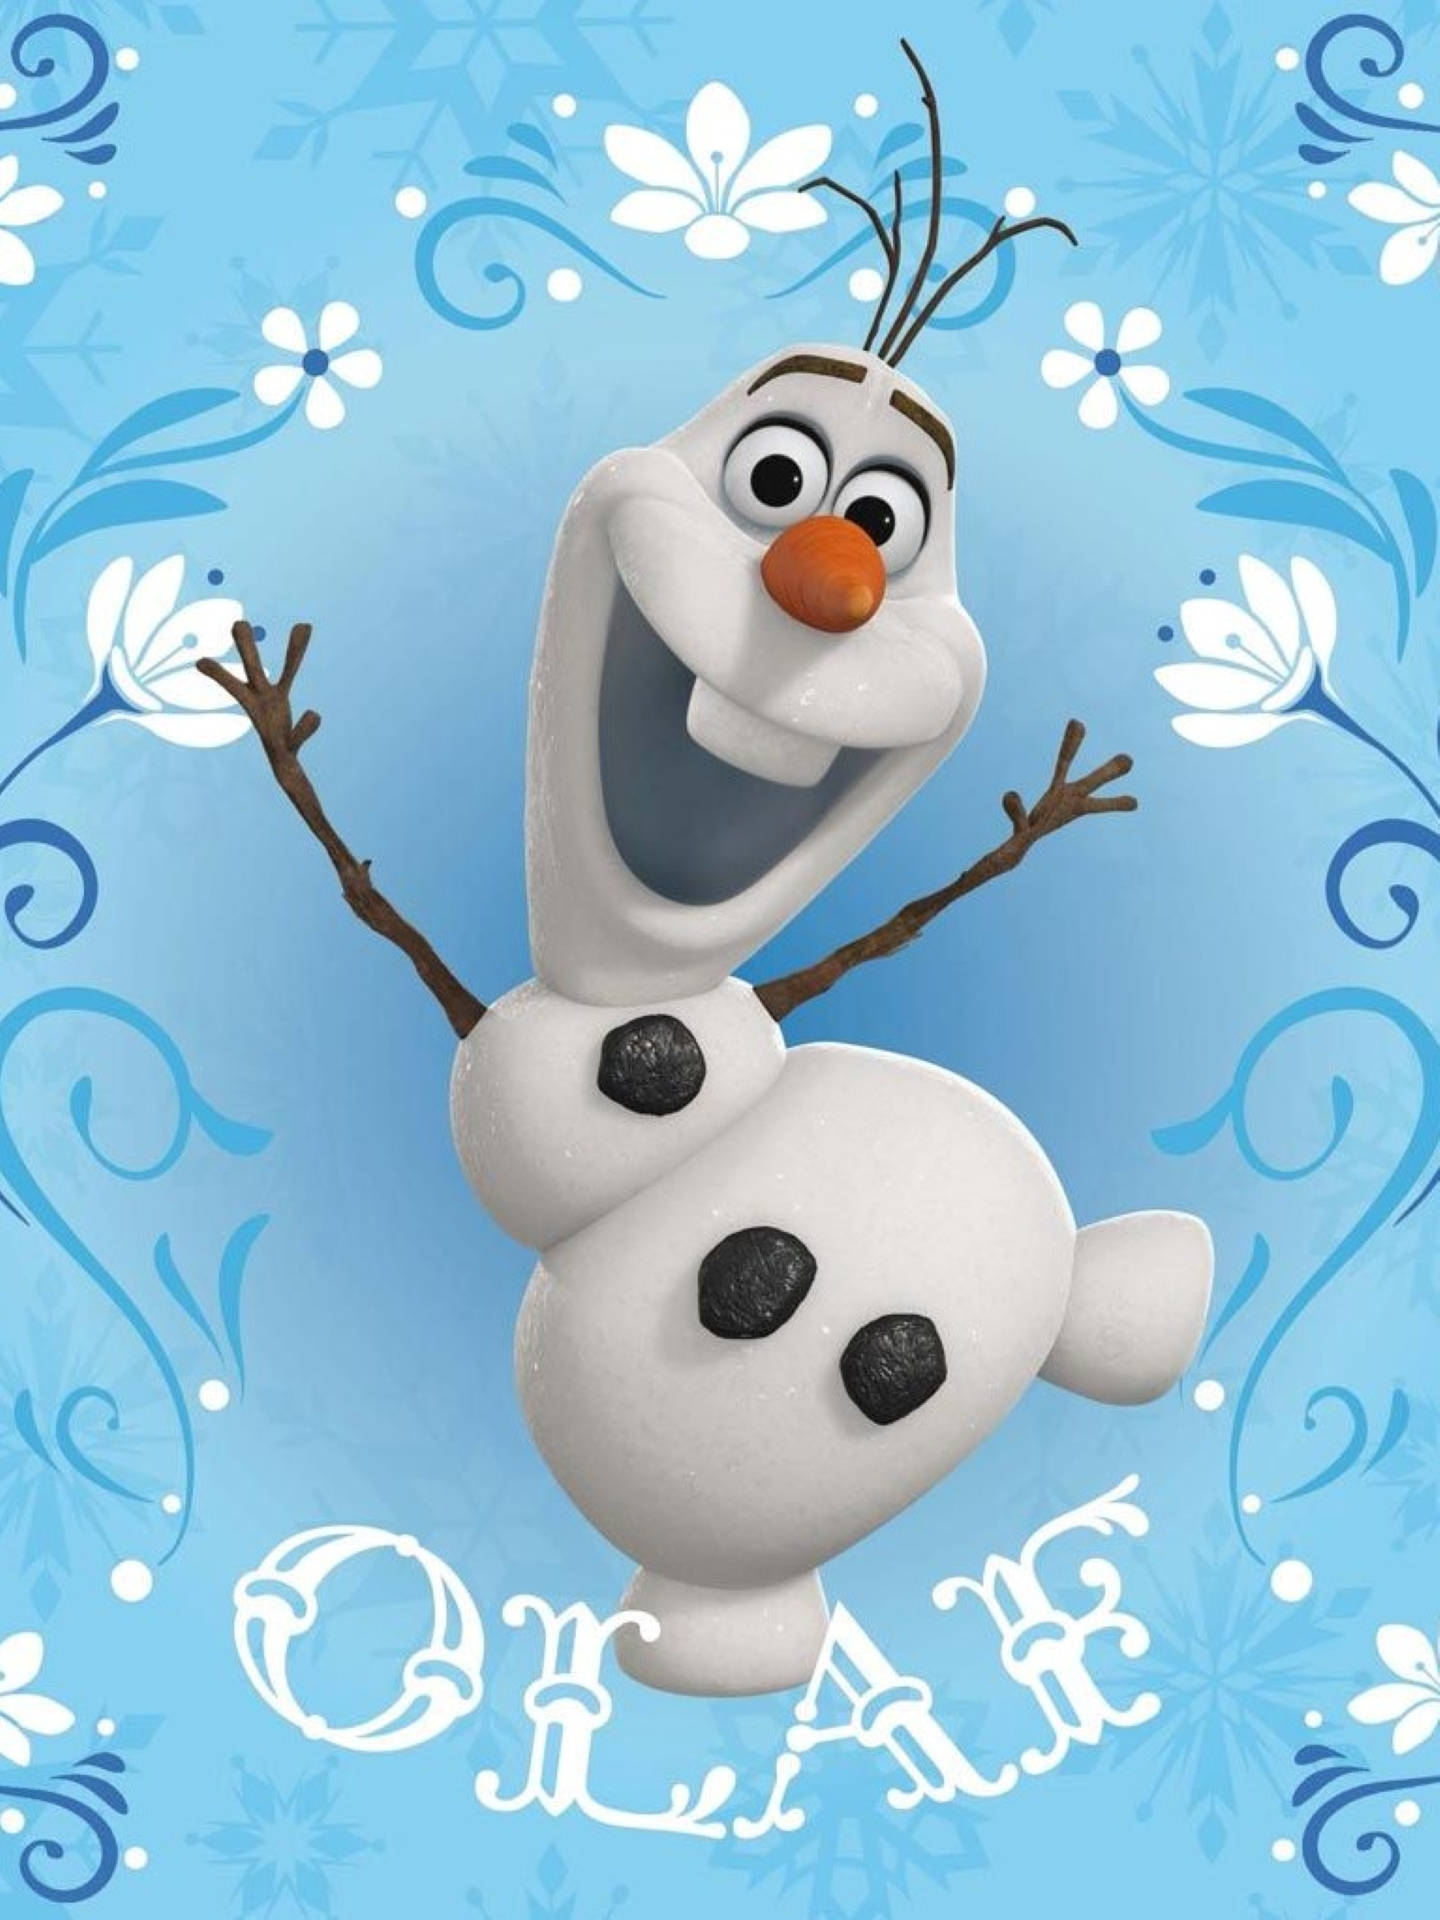 Olaf Frozen Wallpapers